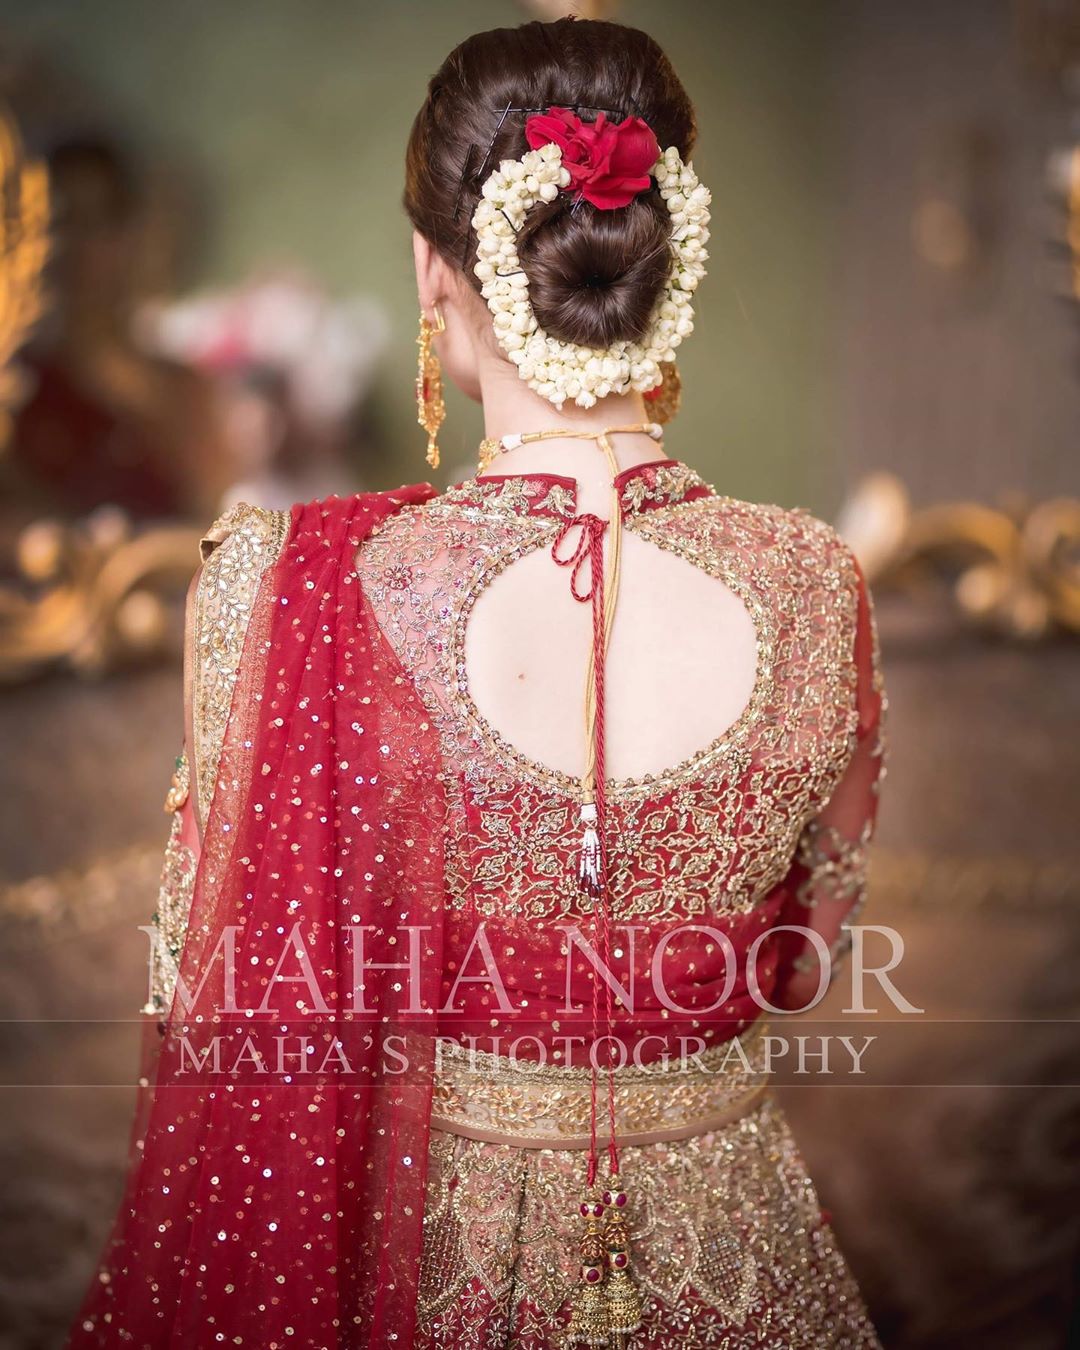 Beautiful Minal Khan Looking Stunning in New #photoshoot